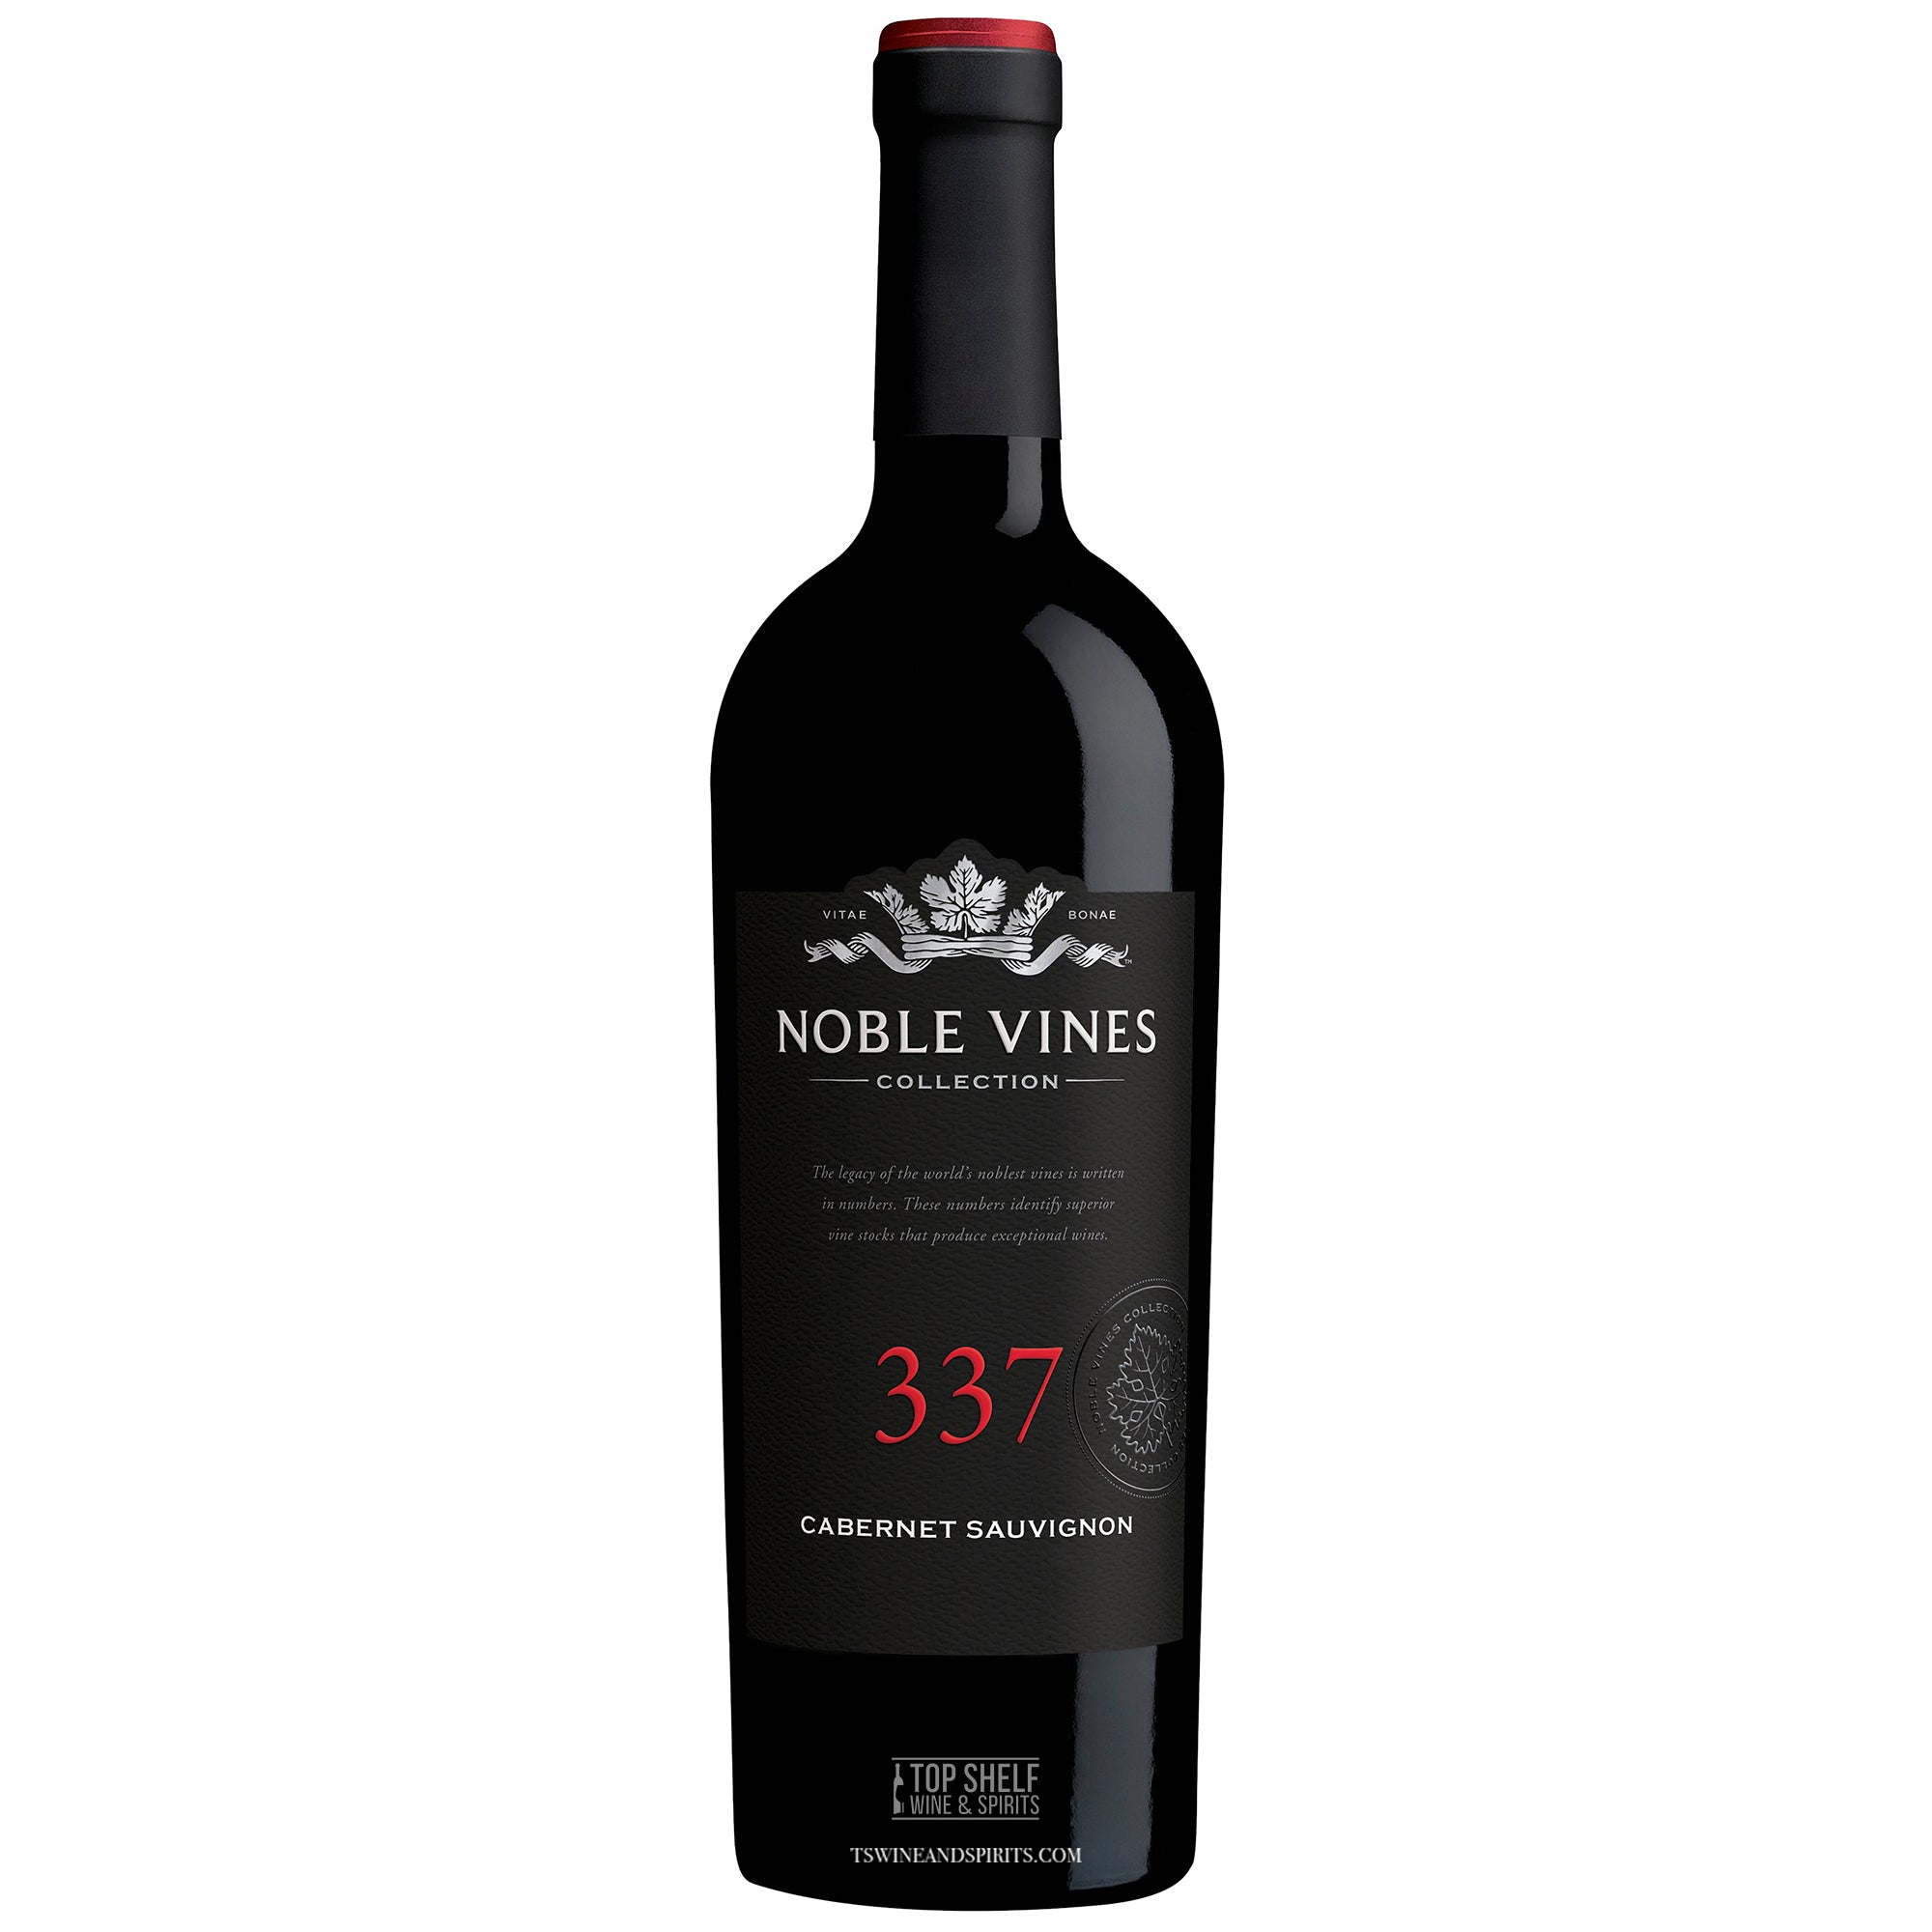 Noble Vines 337 Cabernet Sauvignon